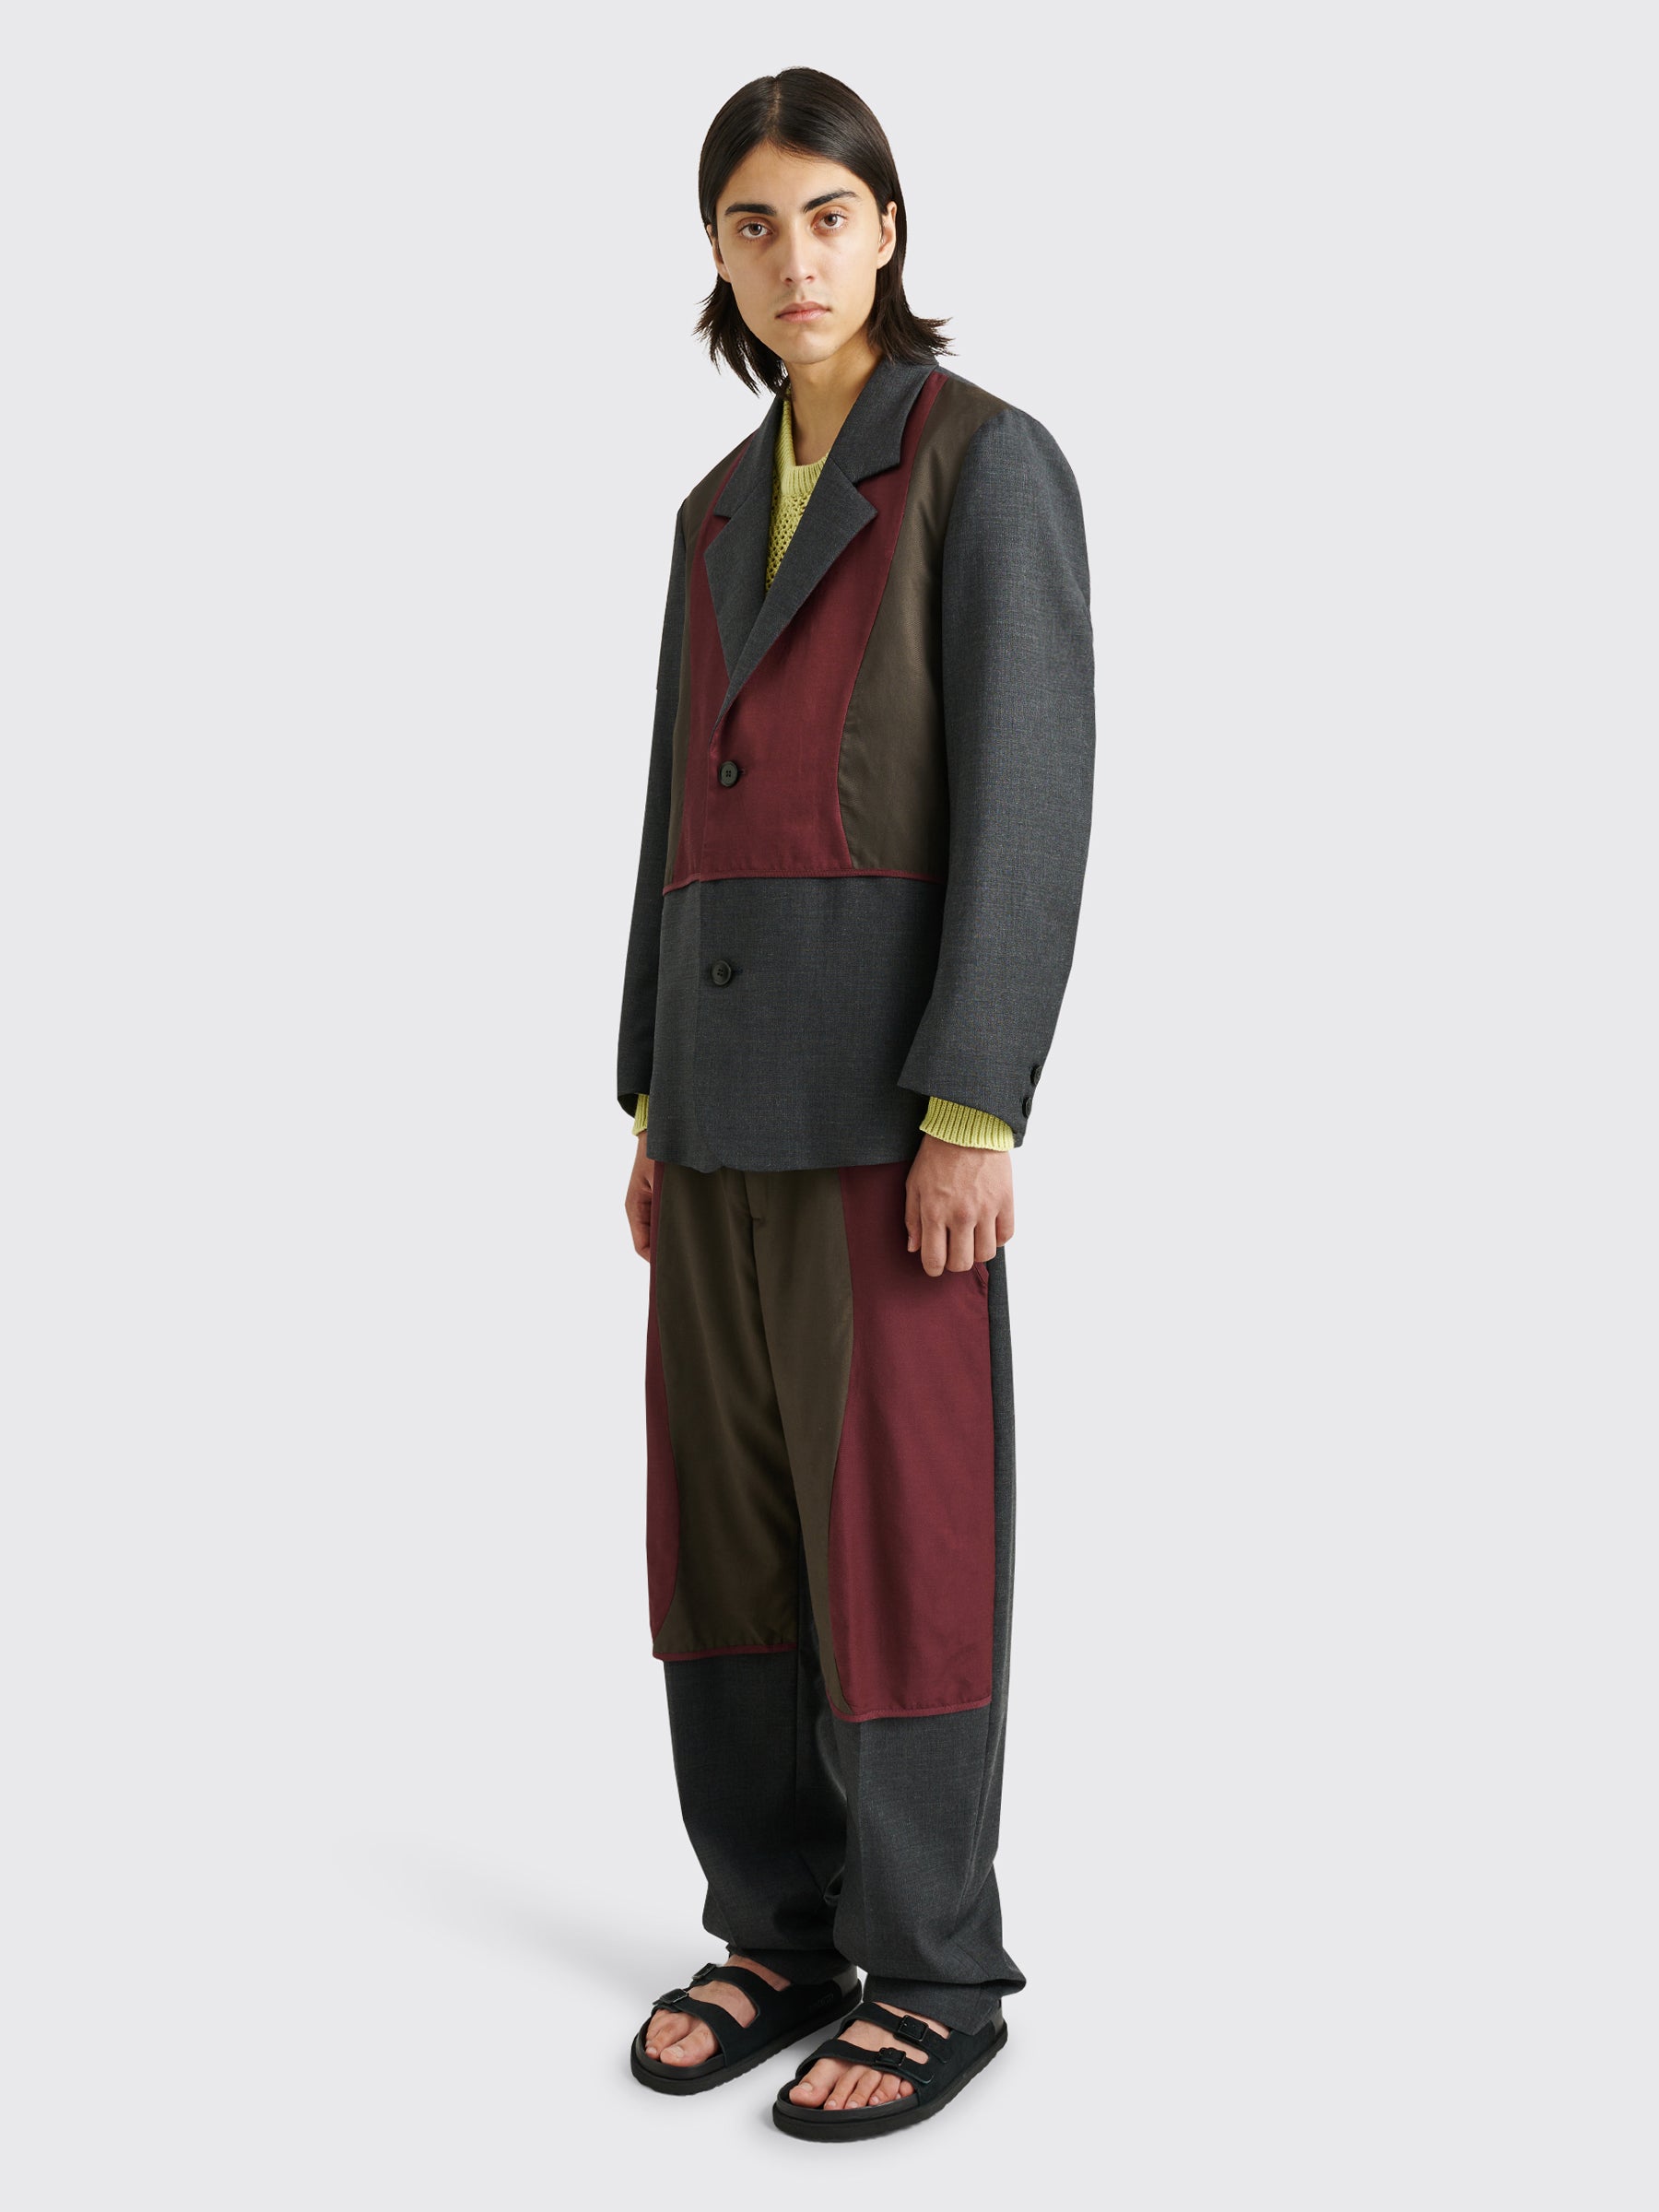 TRES BIEN ATELJÉ Double Front Suit Jacket Wool Dark Grey